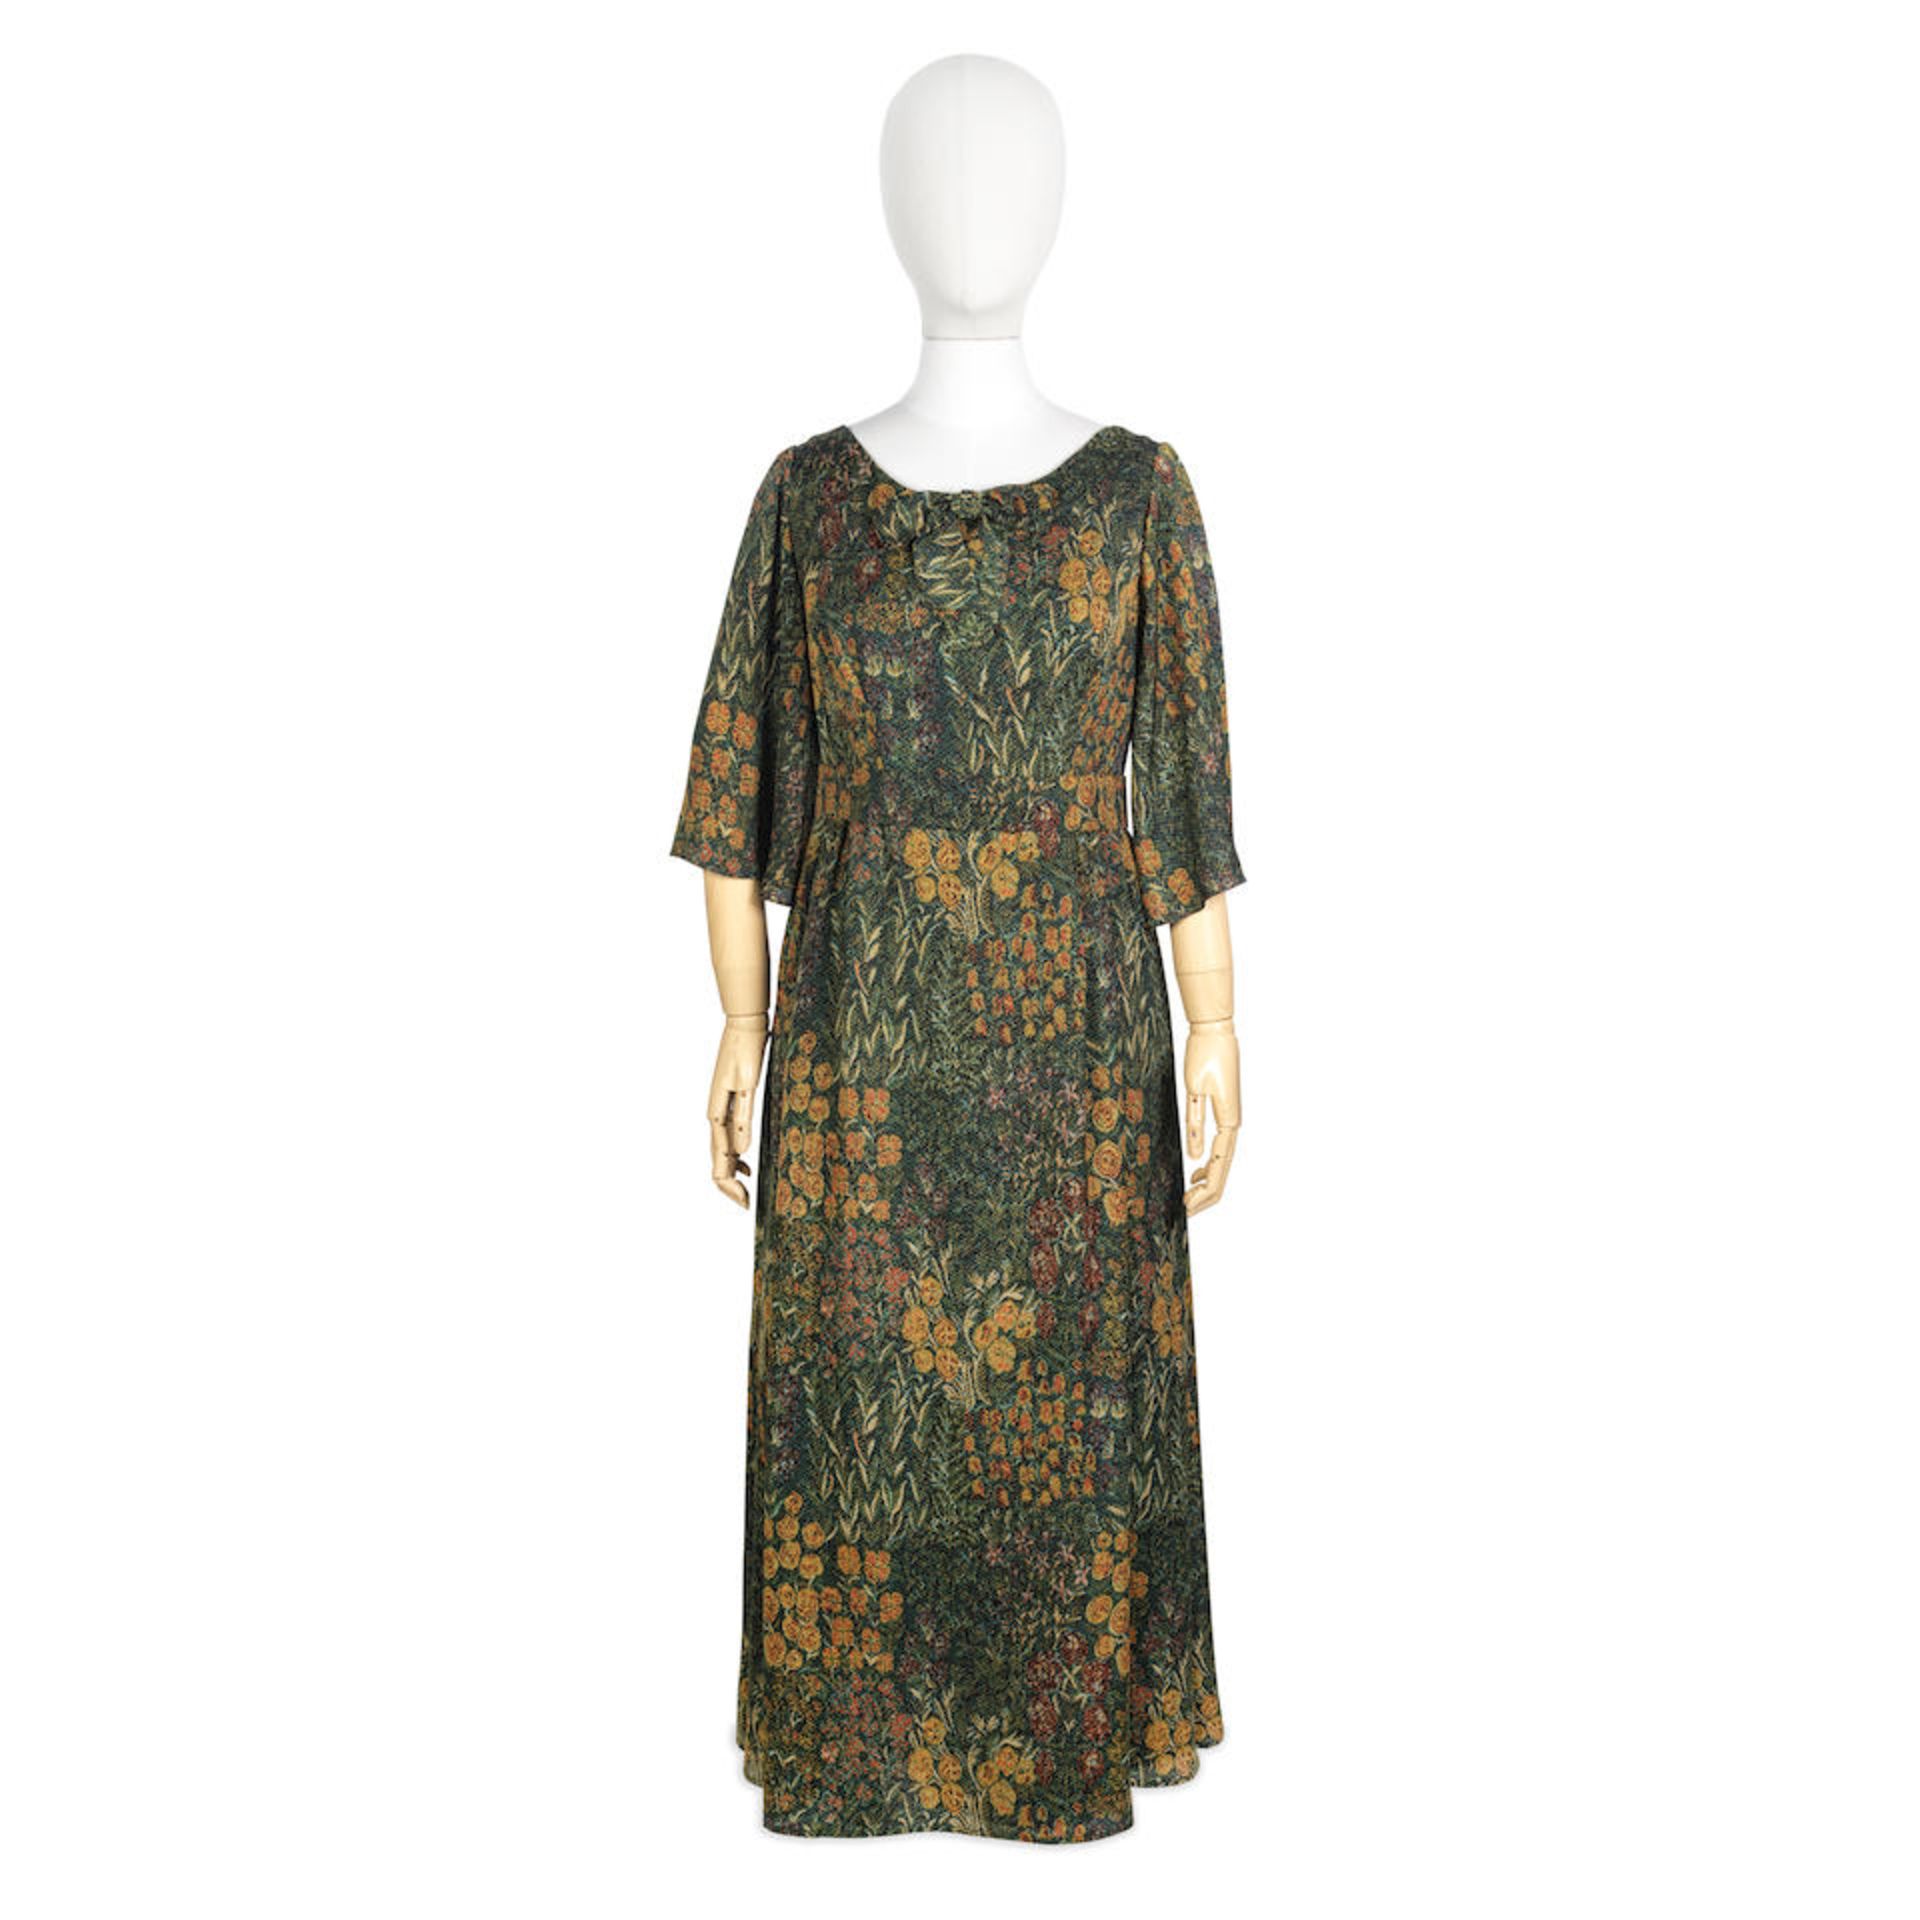 Imelda Staunton (as the Queen): A full-length floral print dress Season 6, Episode 1, 'Persona N...